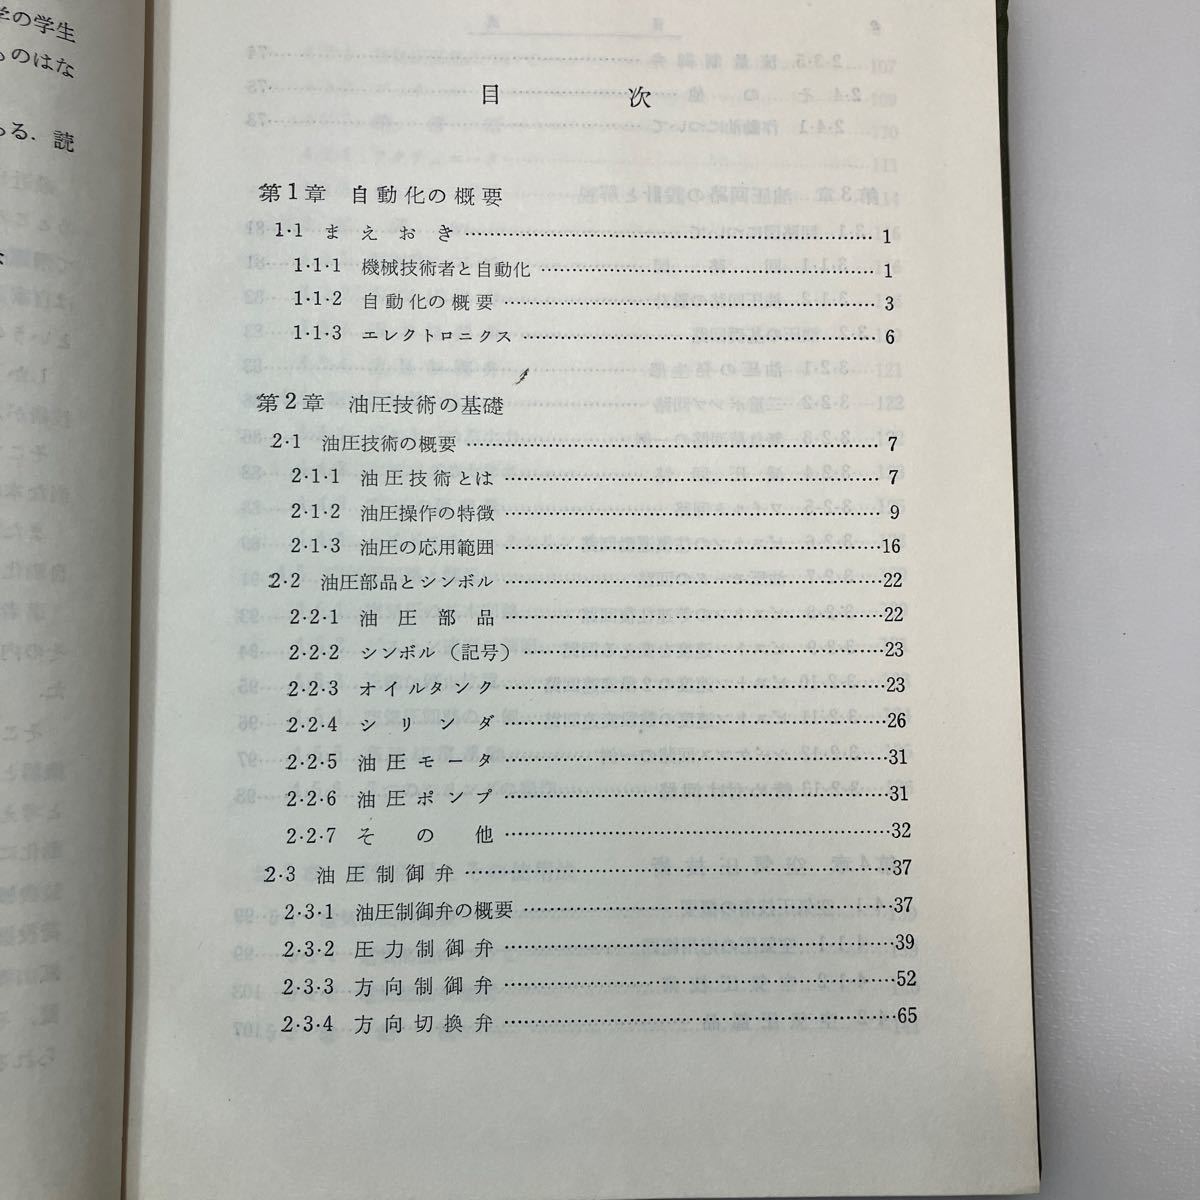 zaa546♪自動化機器の設計と製作　杉田稔(著) 日刊工業新聞社. (1971/630)